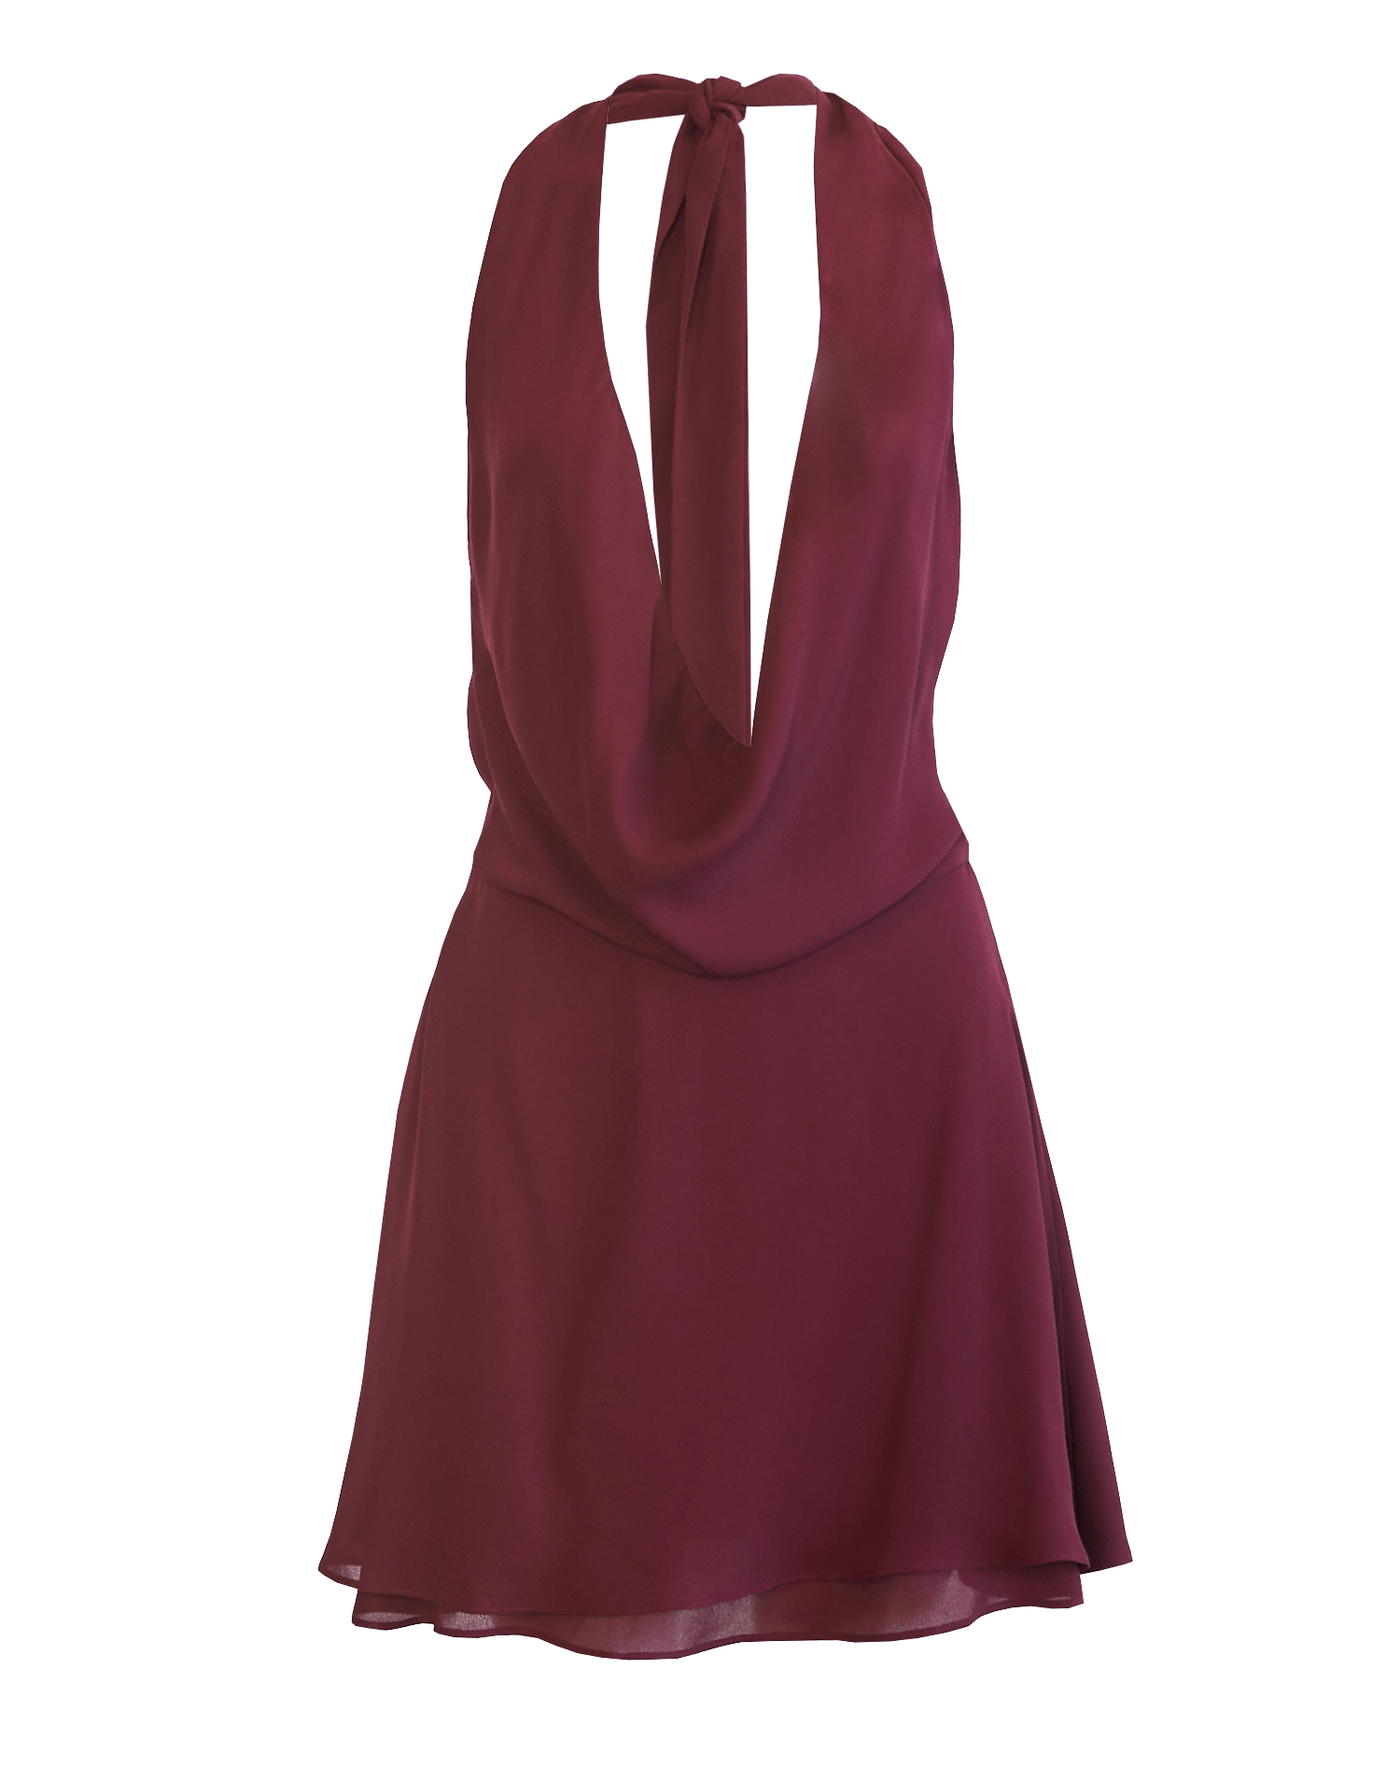 Kyeesha Mini Dress (Plum) - Plum Halter Cowl Neck Mini Dress - Women's Dress - Charcoal Clothing